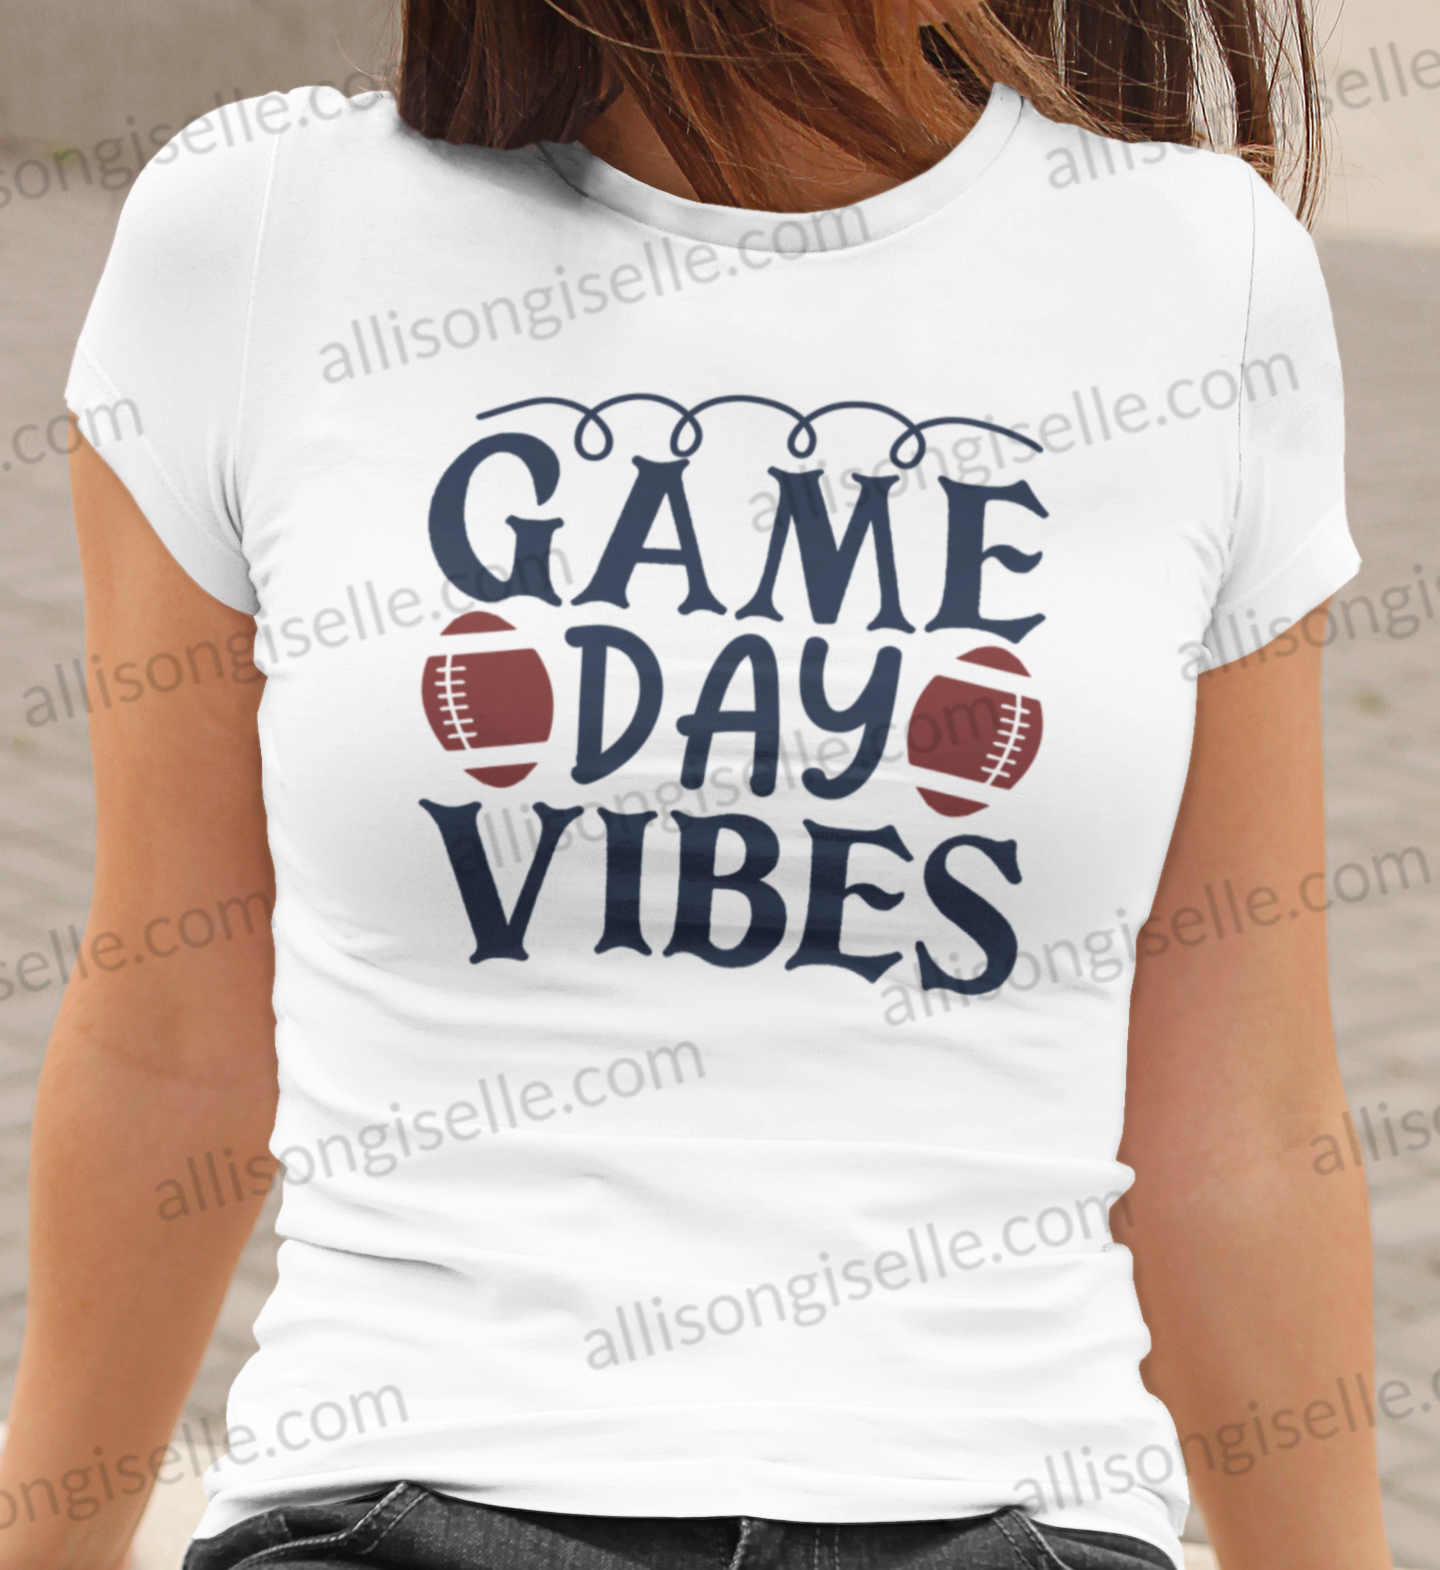 Game Day Vibes Football Shirt, Football Shirt, Football Shirt Women, Crew Neck Women Shirt, Football t shirt, Football t shirt Women